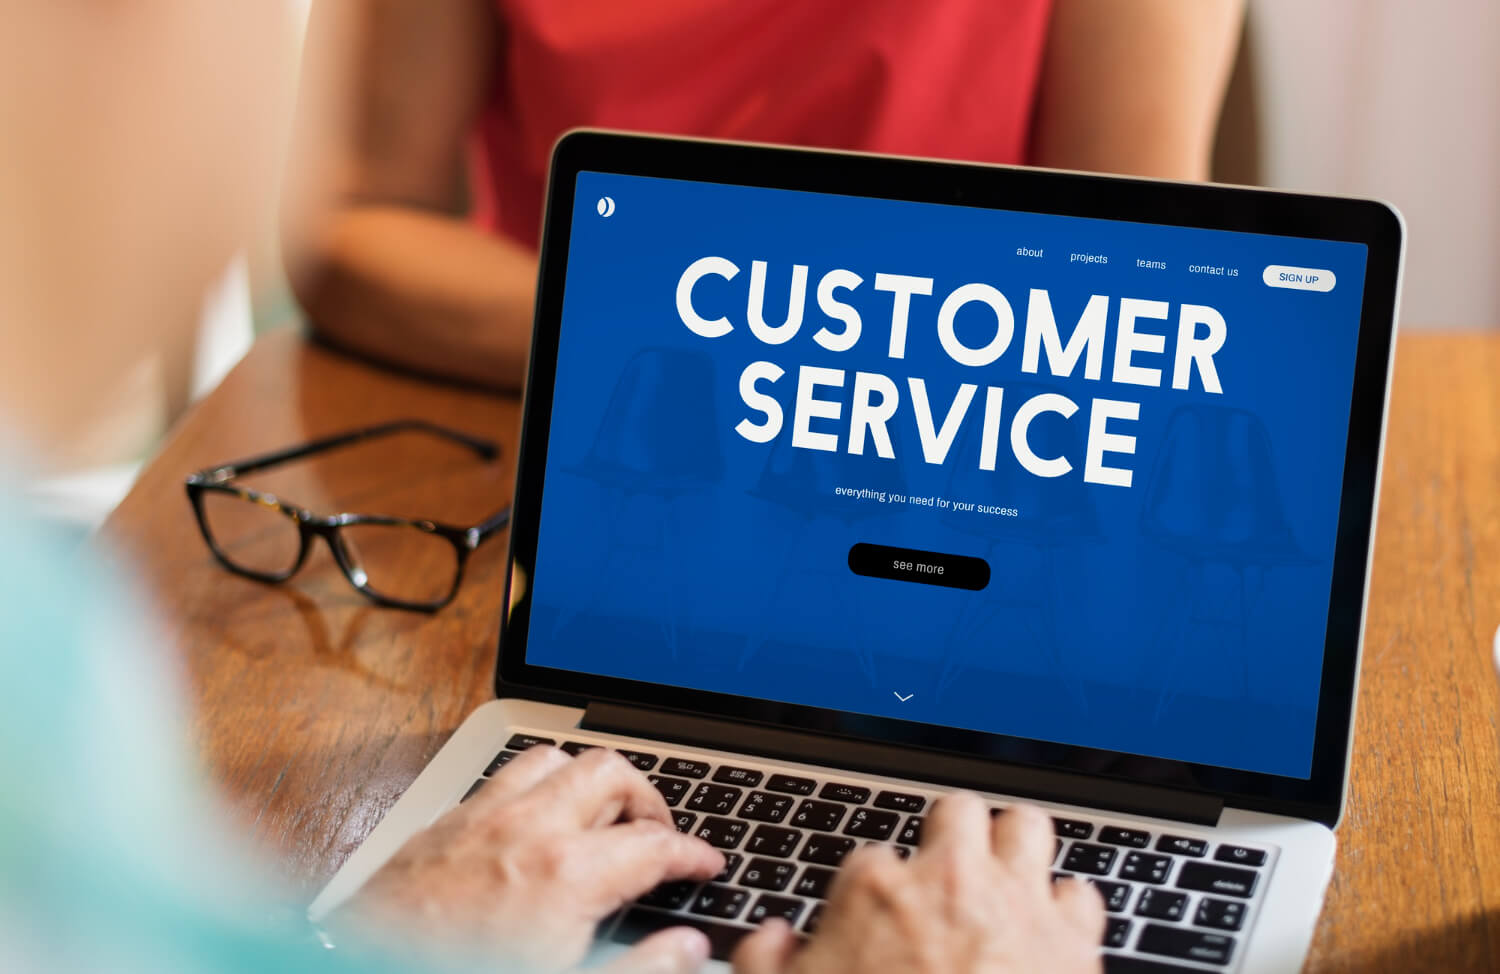 Customer service webpage interface